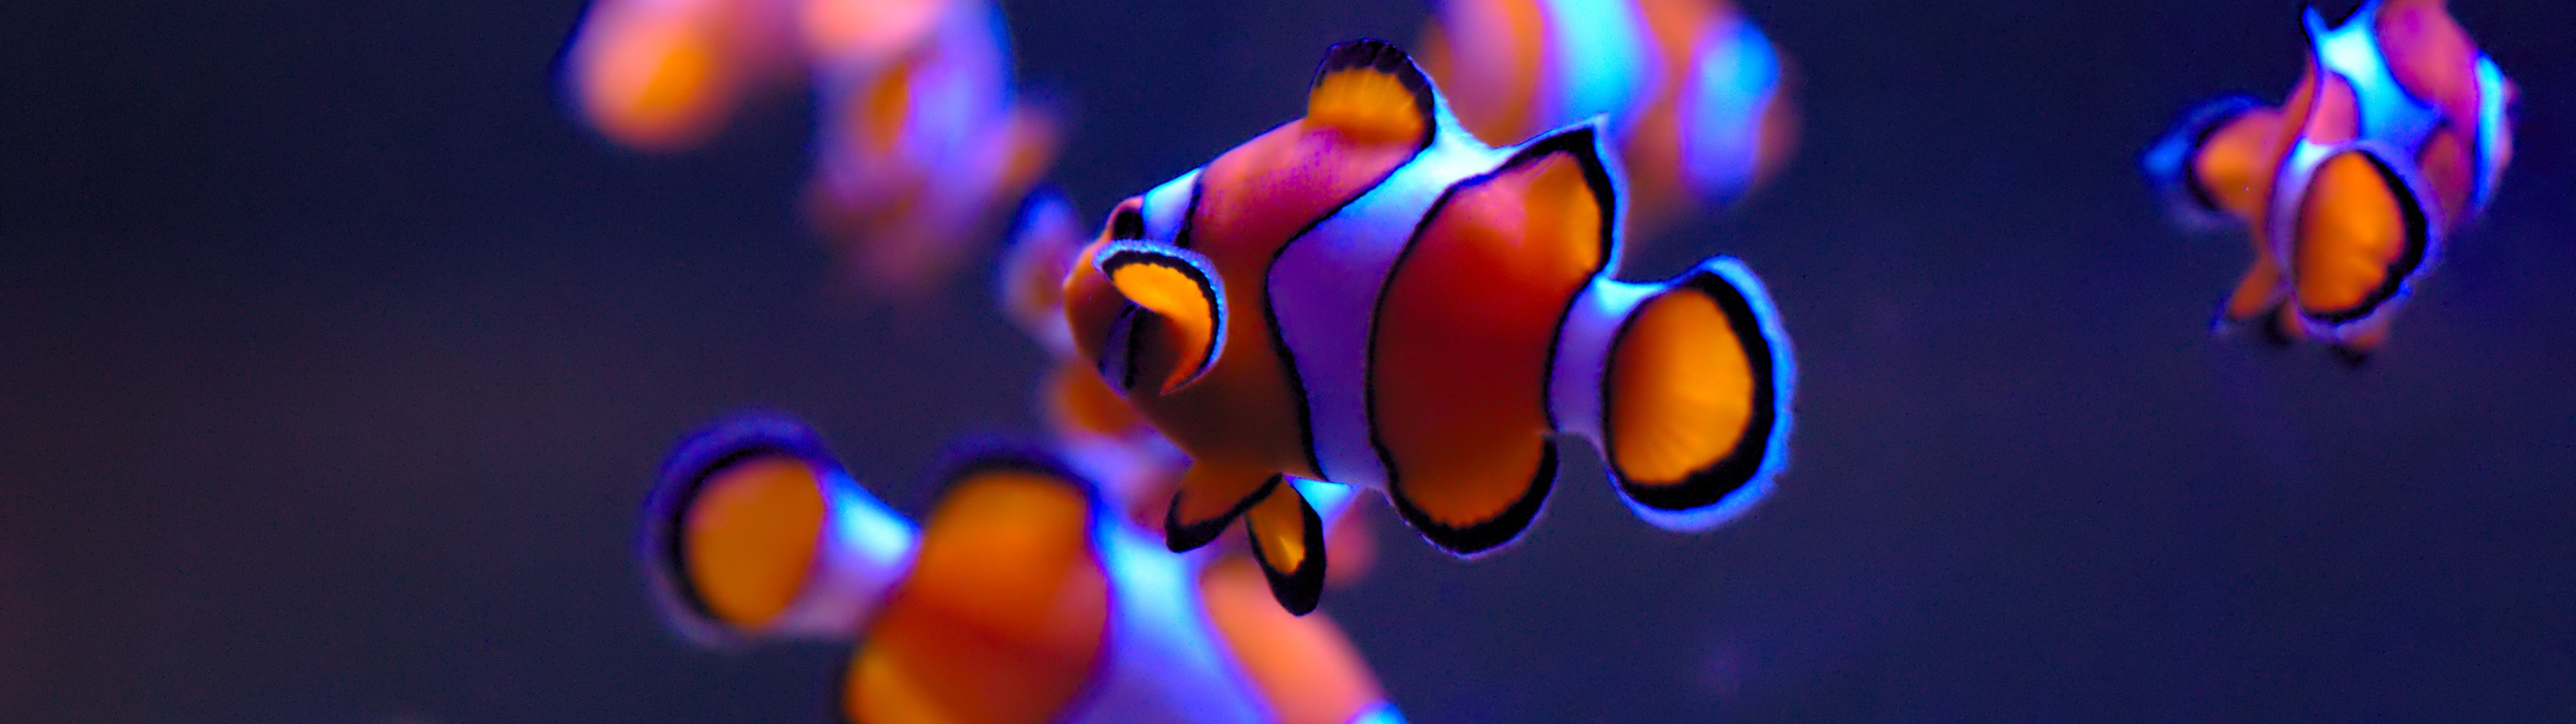 4K wallpaper, Aquarium underwater beauty, Stunning underwater animals, Clownfish wonder, 3840x1080 Dual Screen Desktop